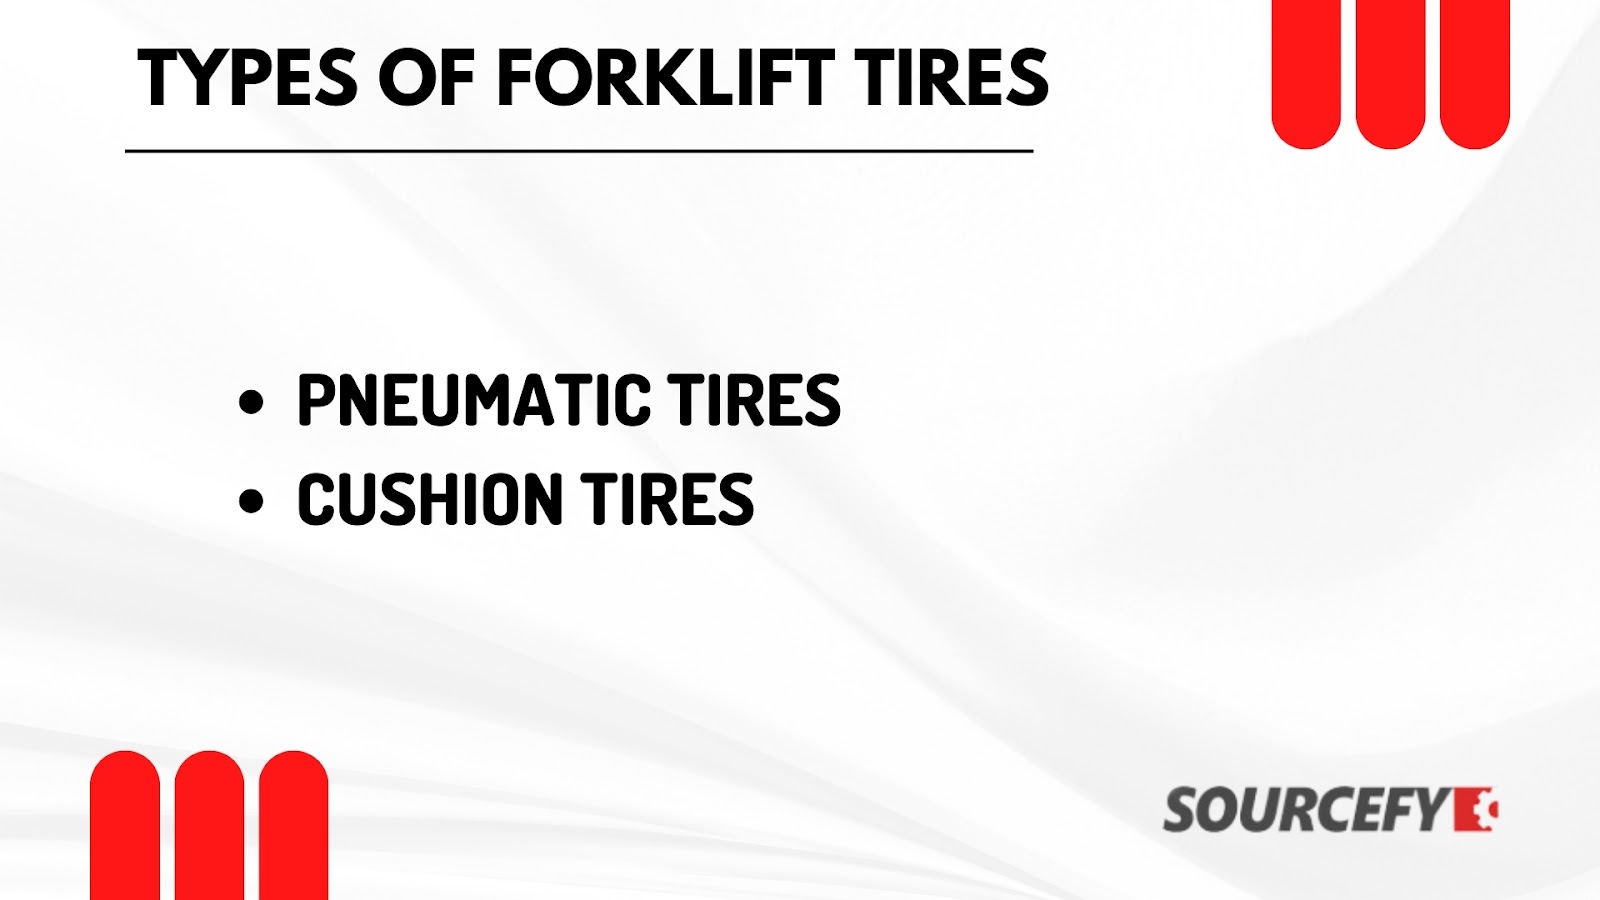 Types of Forklift Tires